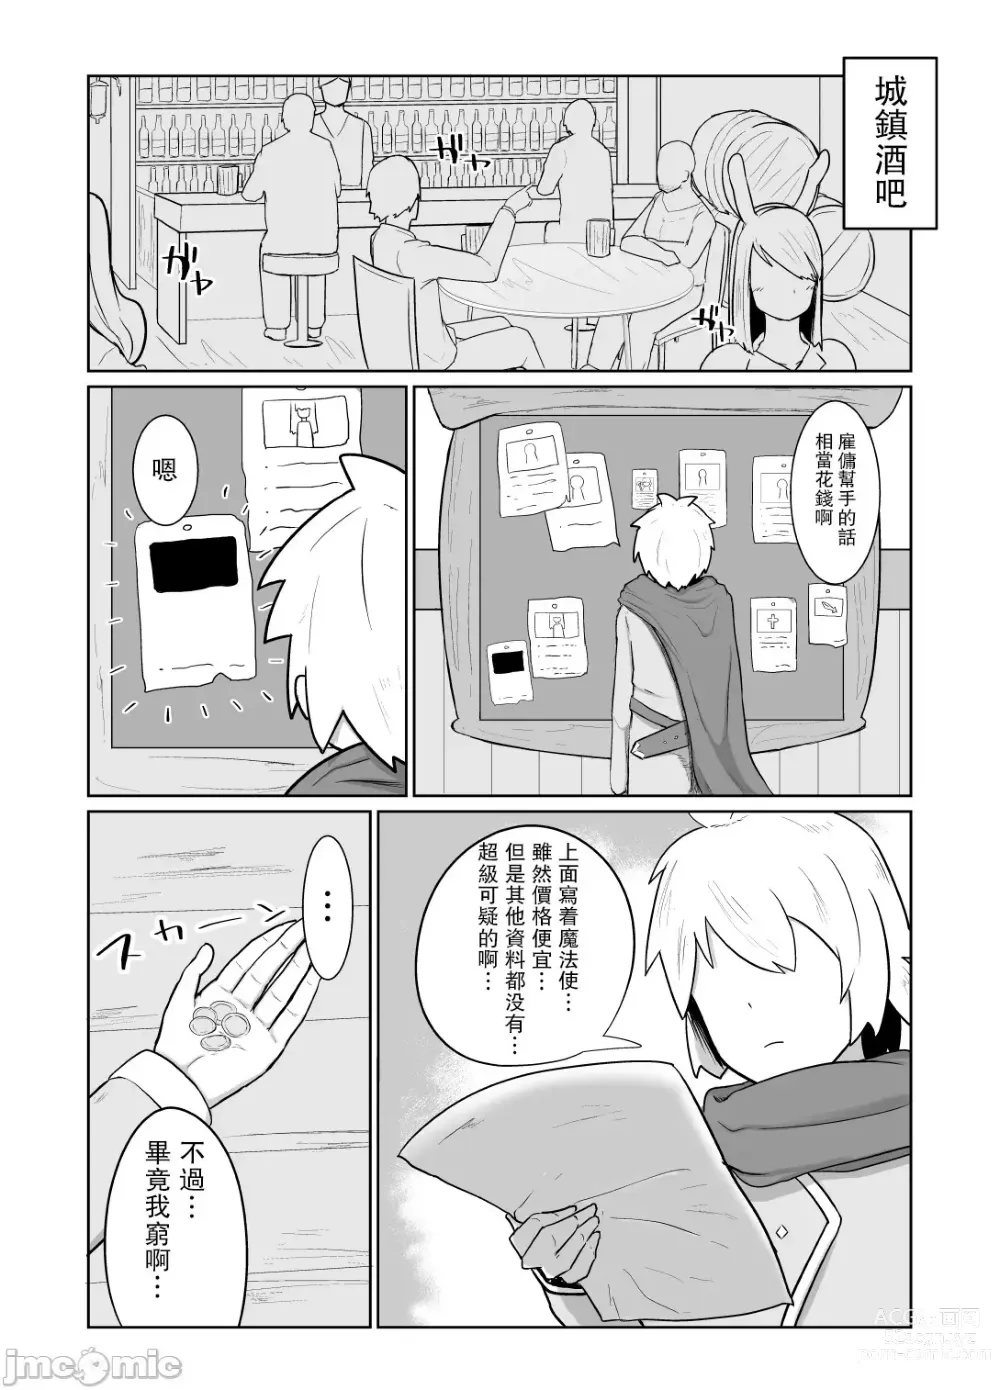 Page 6 of manga パーティに雇った魔法使いに無責任種付けする話1-3